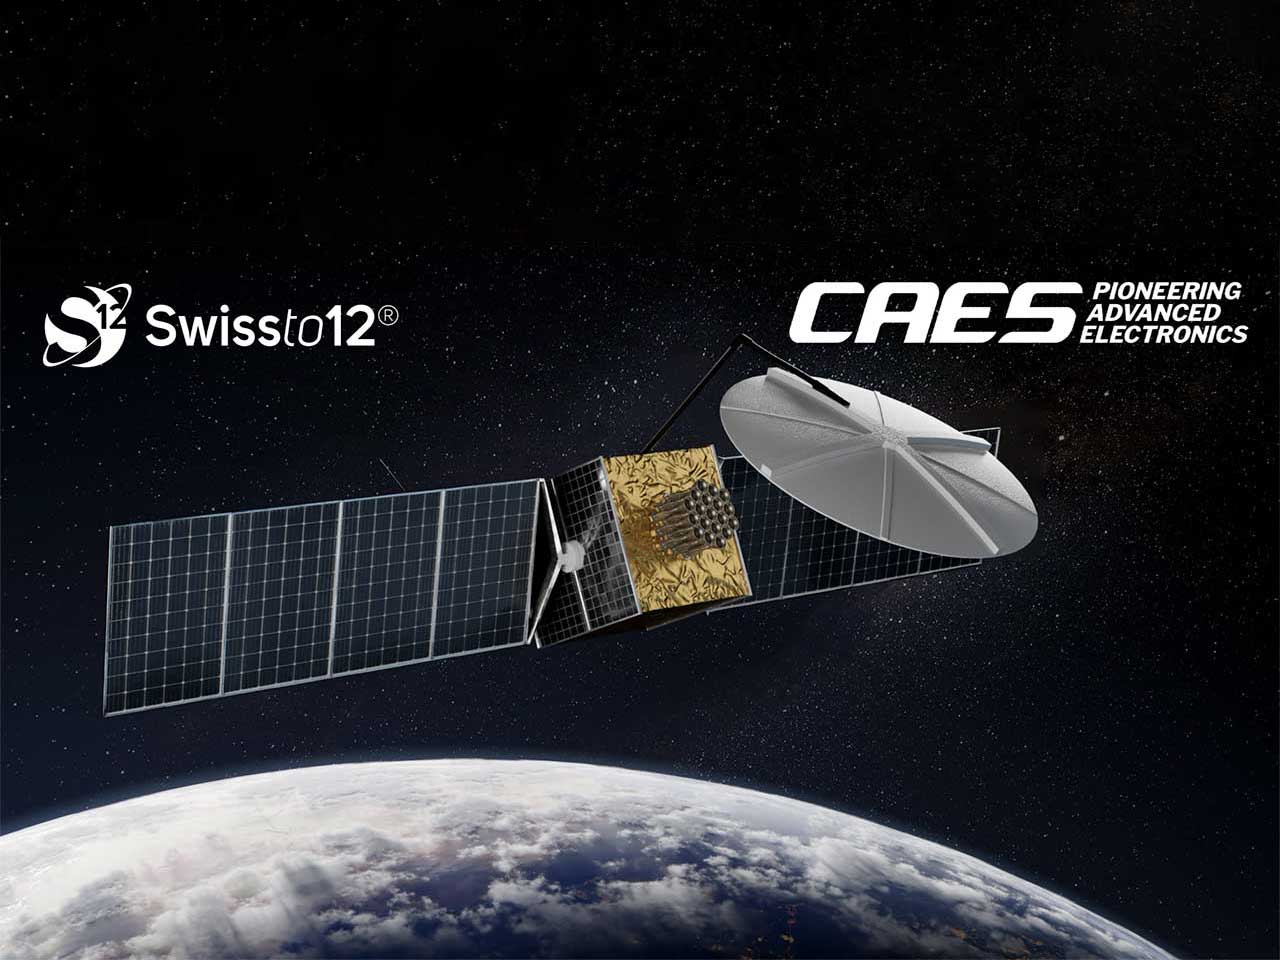 CAES and Swissto12 Partnership